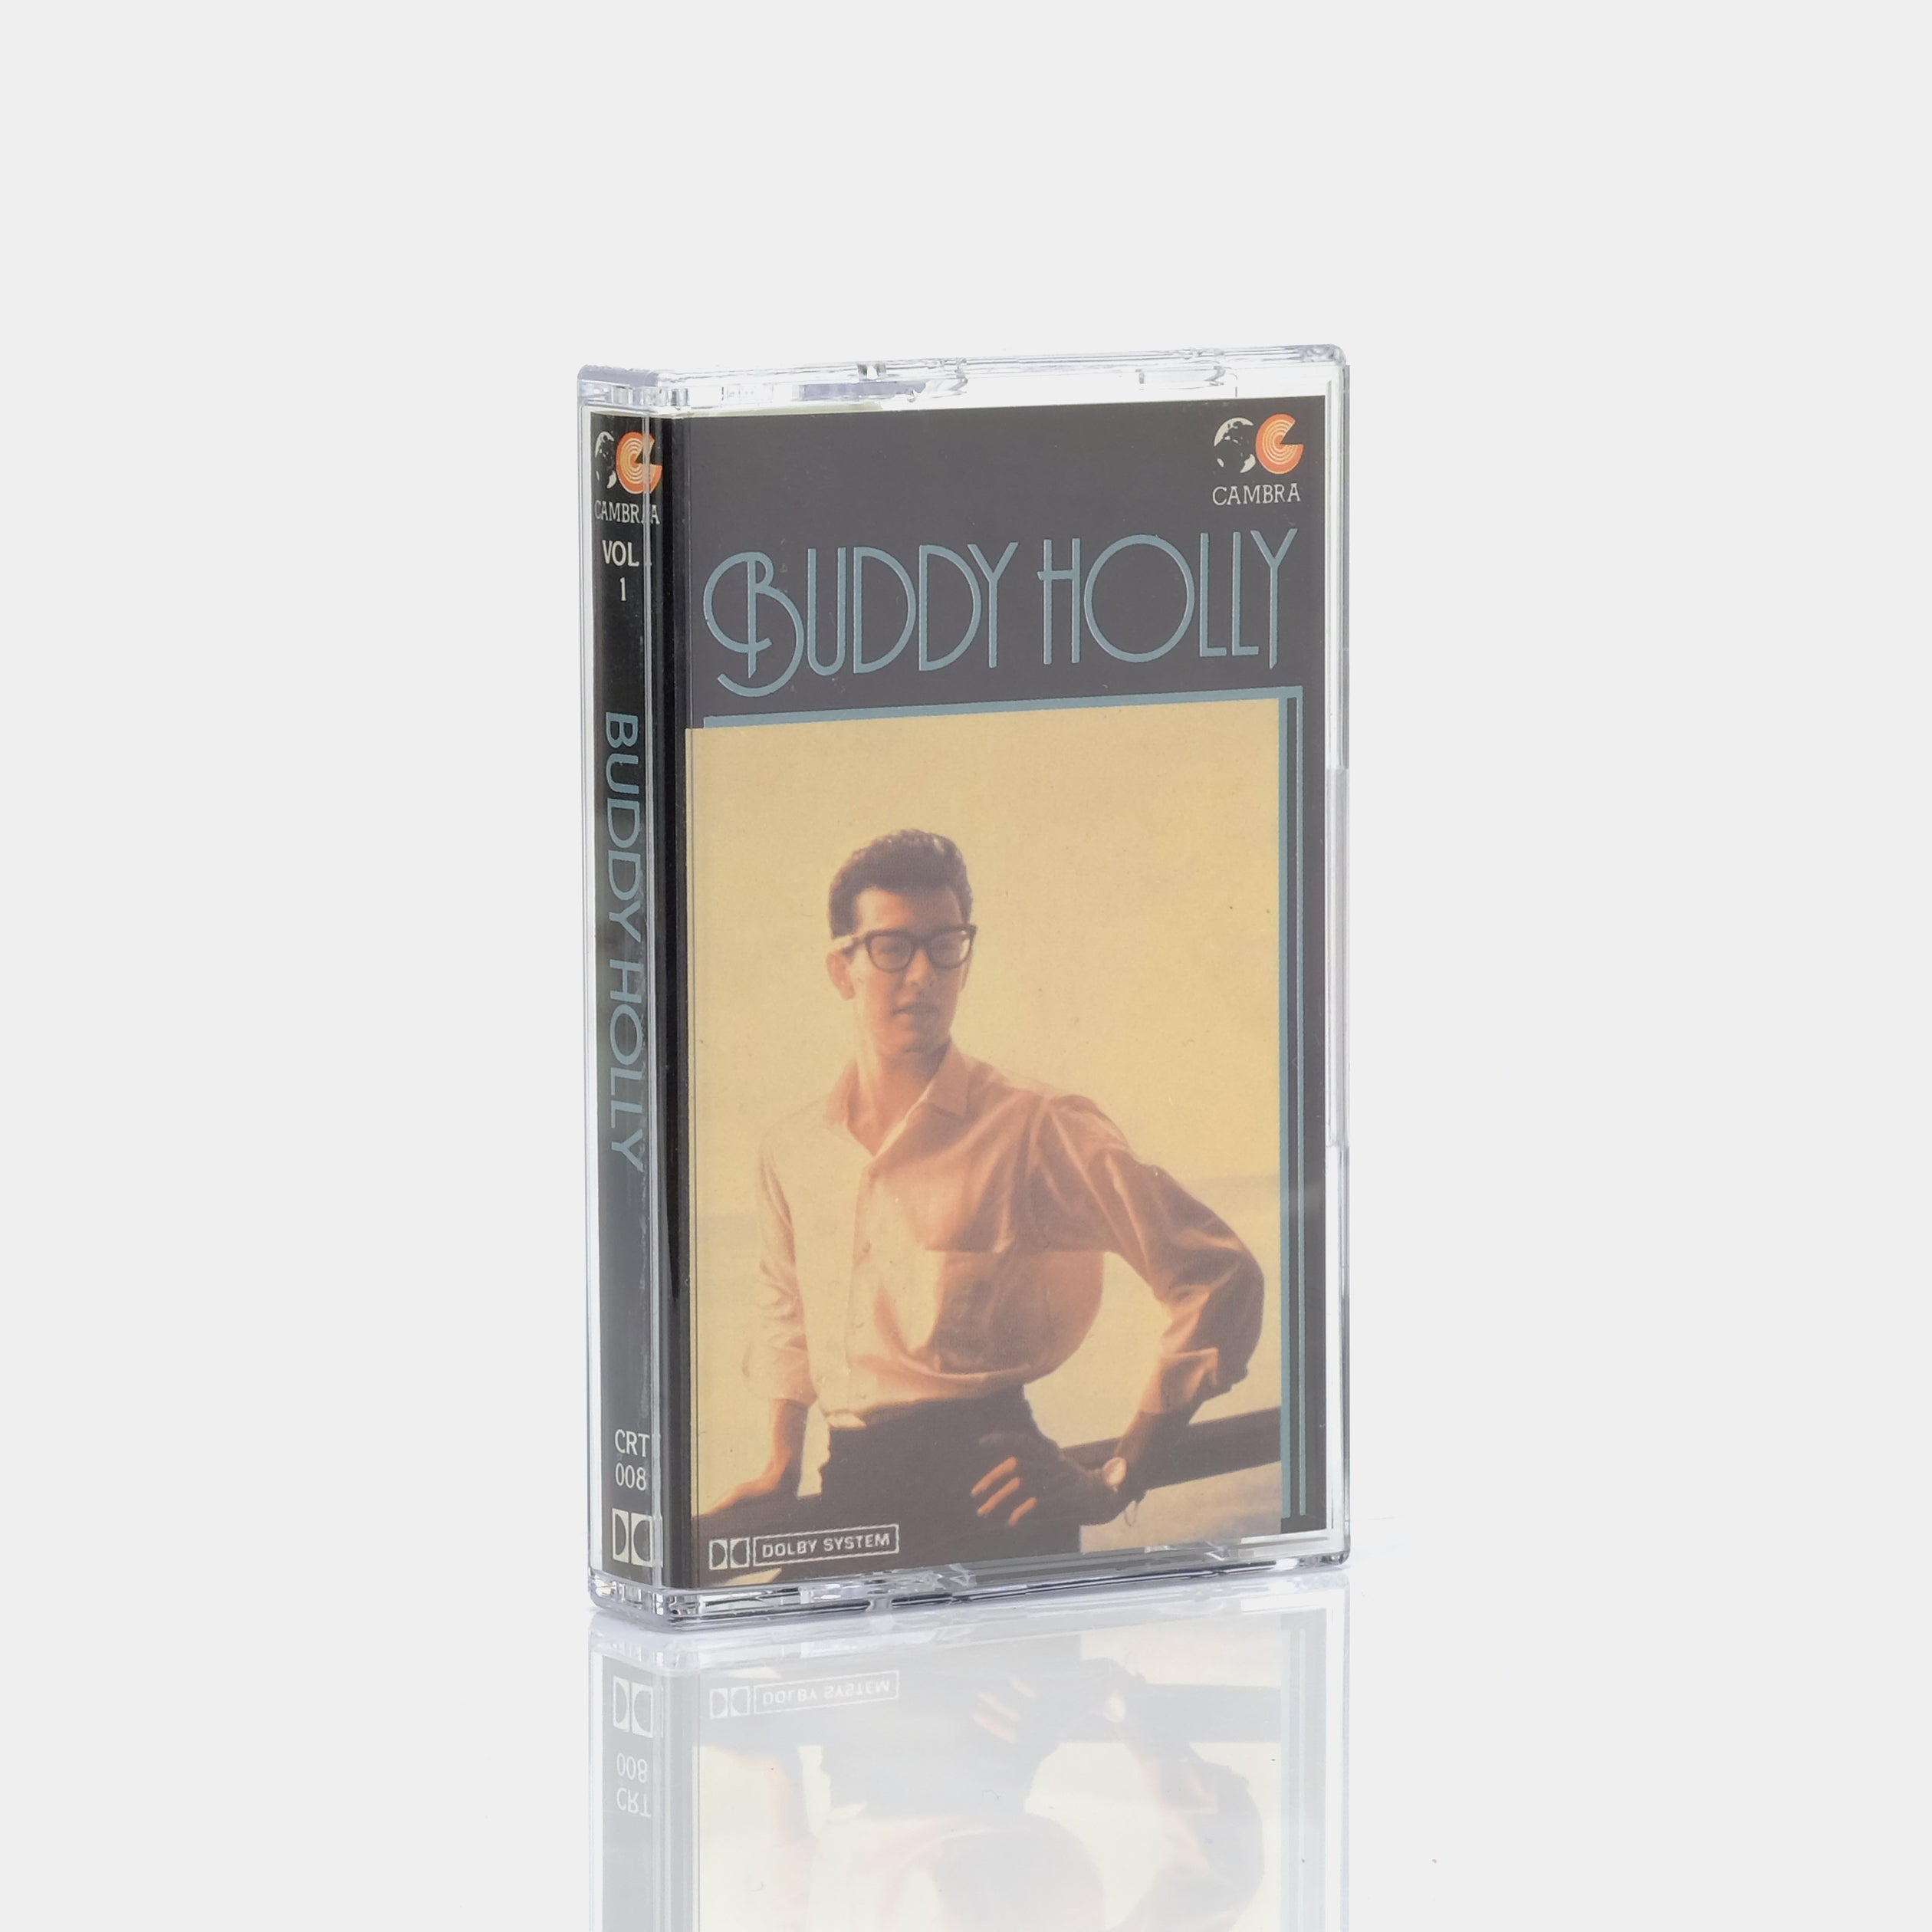 Buddy Holly - Buddy Holly Volume One (1981) Cassette Tape